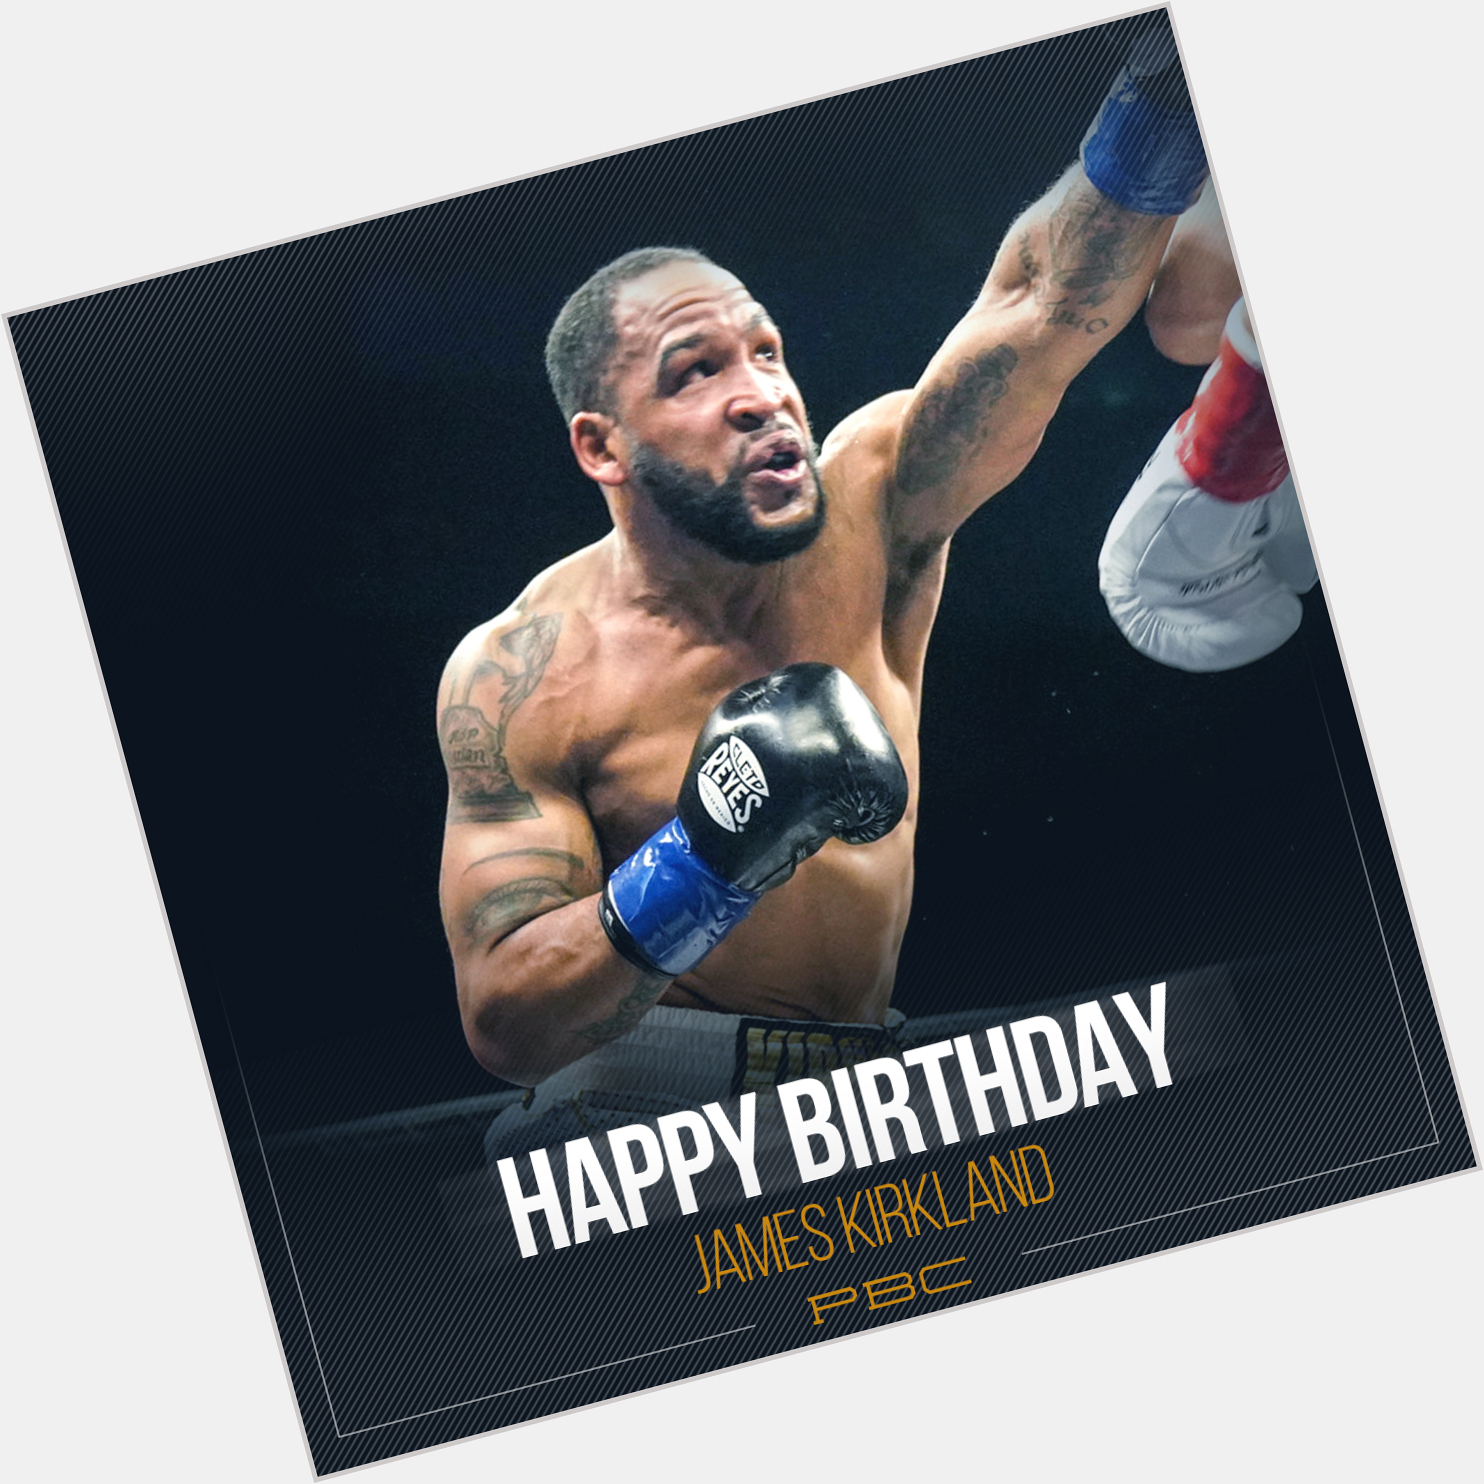 LIKE & REmessage to wish knockout artist James Kirkland a Happy Birthday!  